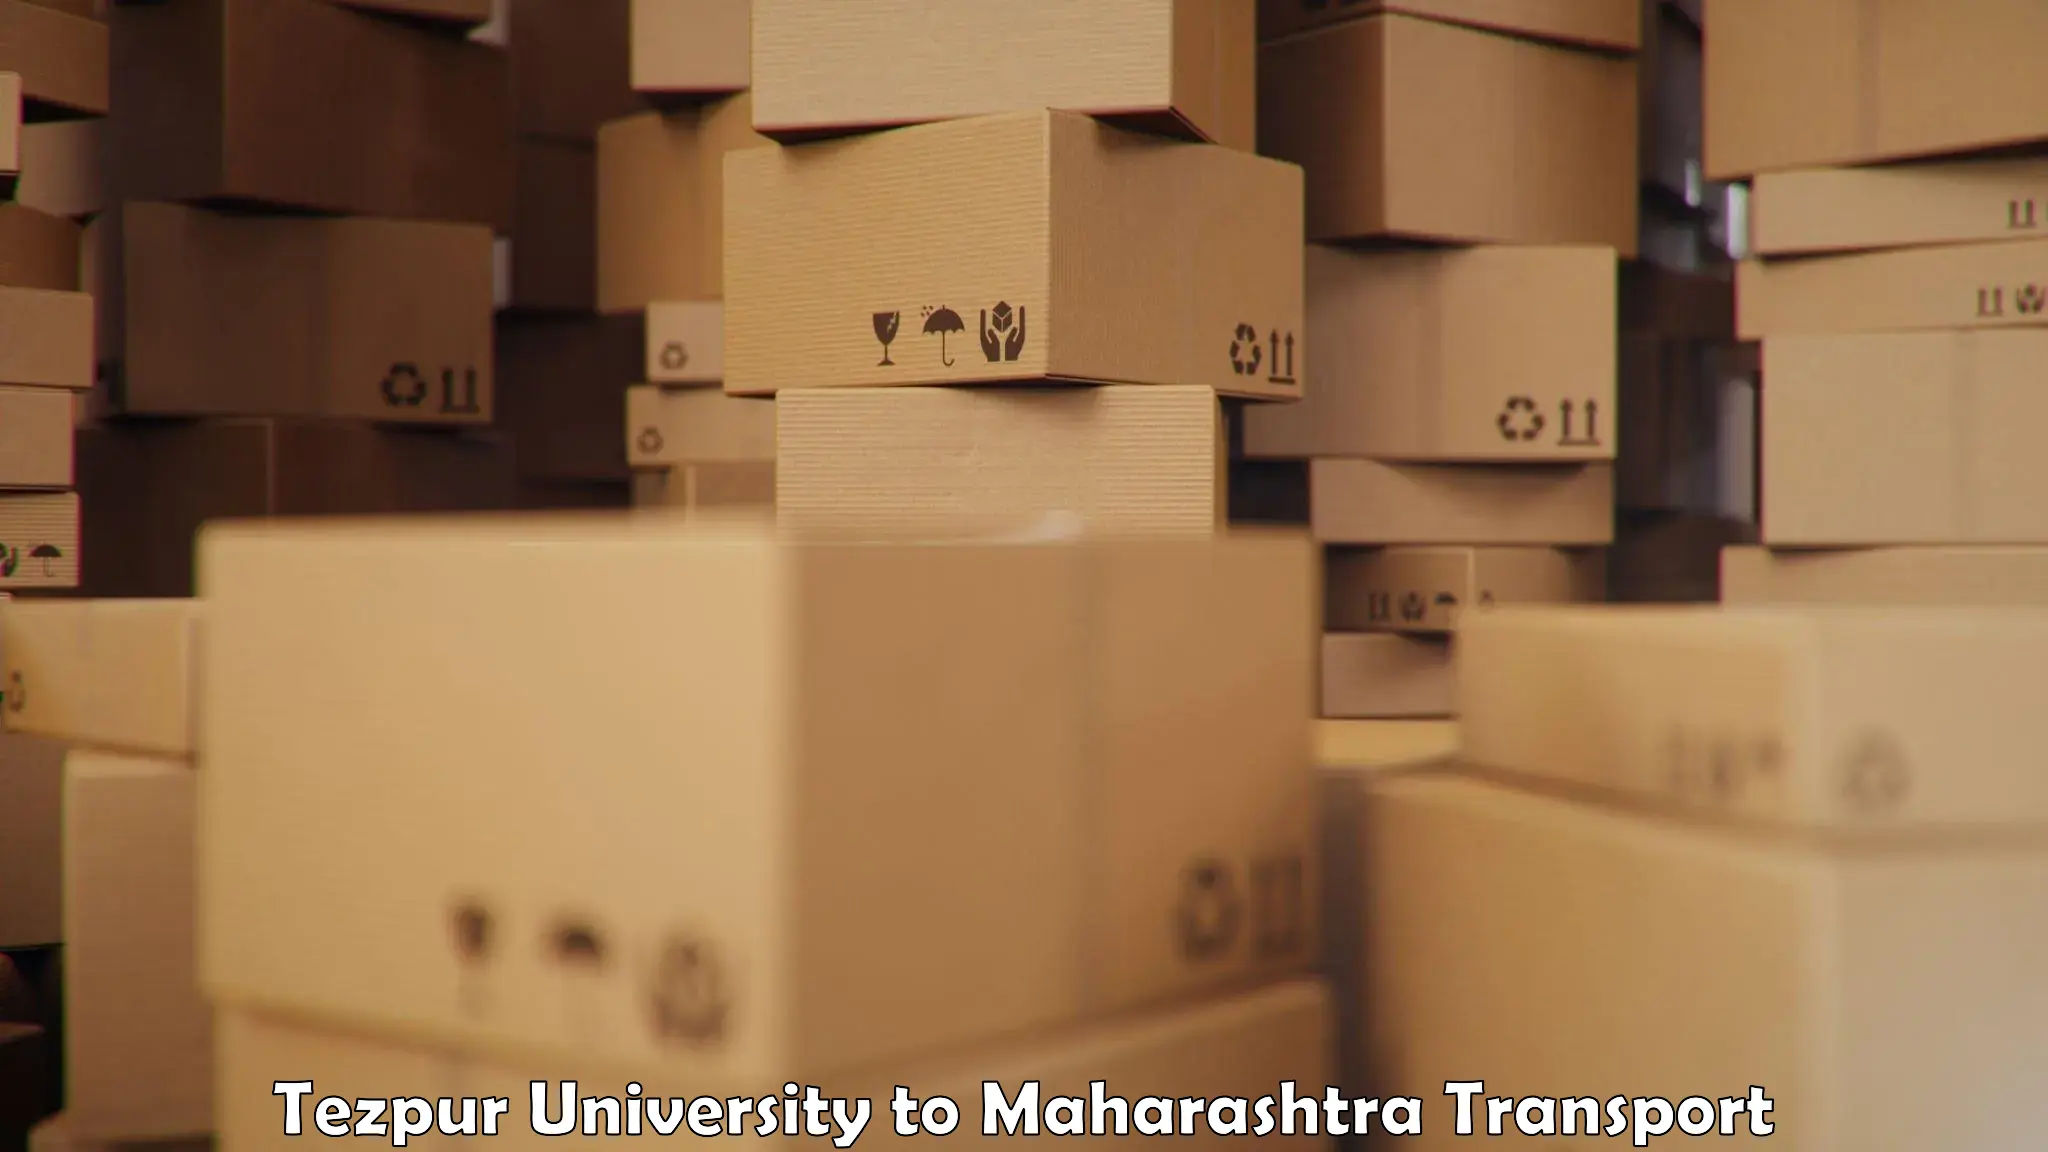 Cargo transportation services Tezpur University to Pune